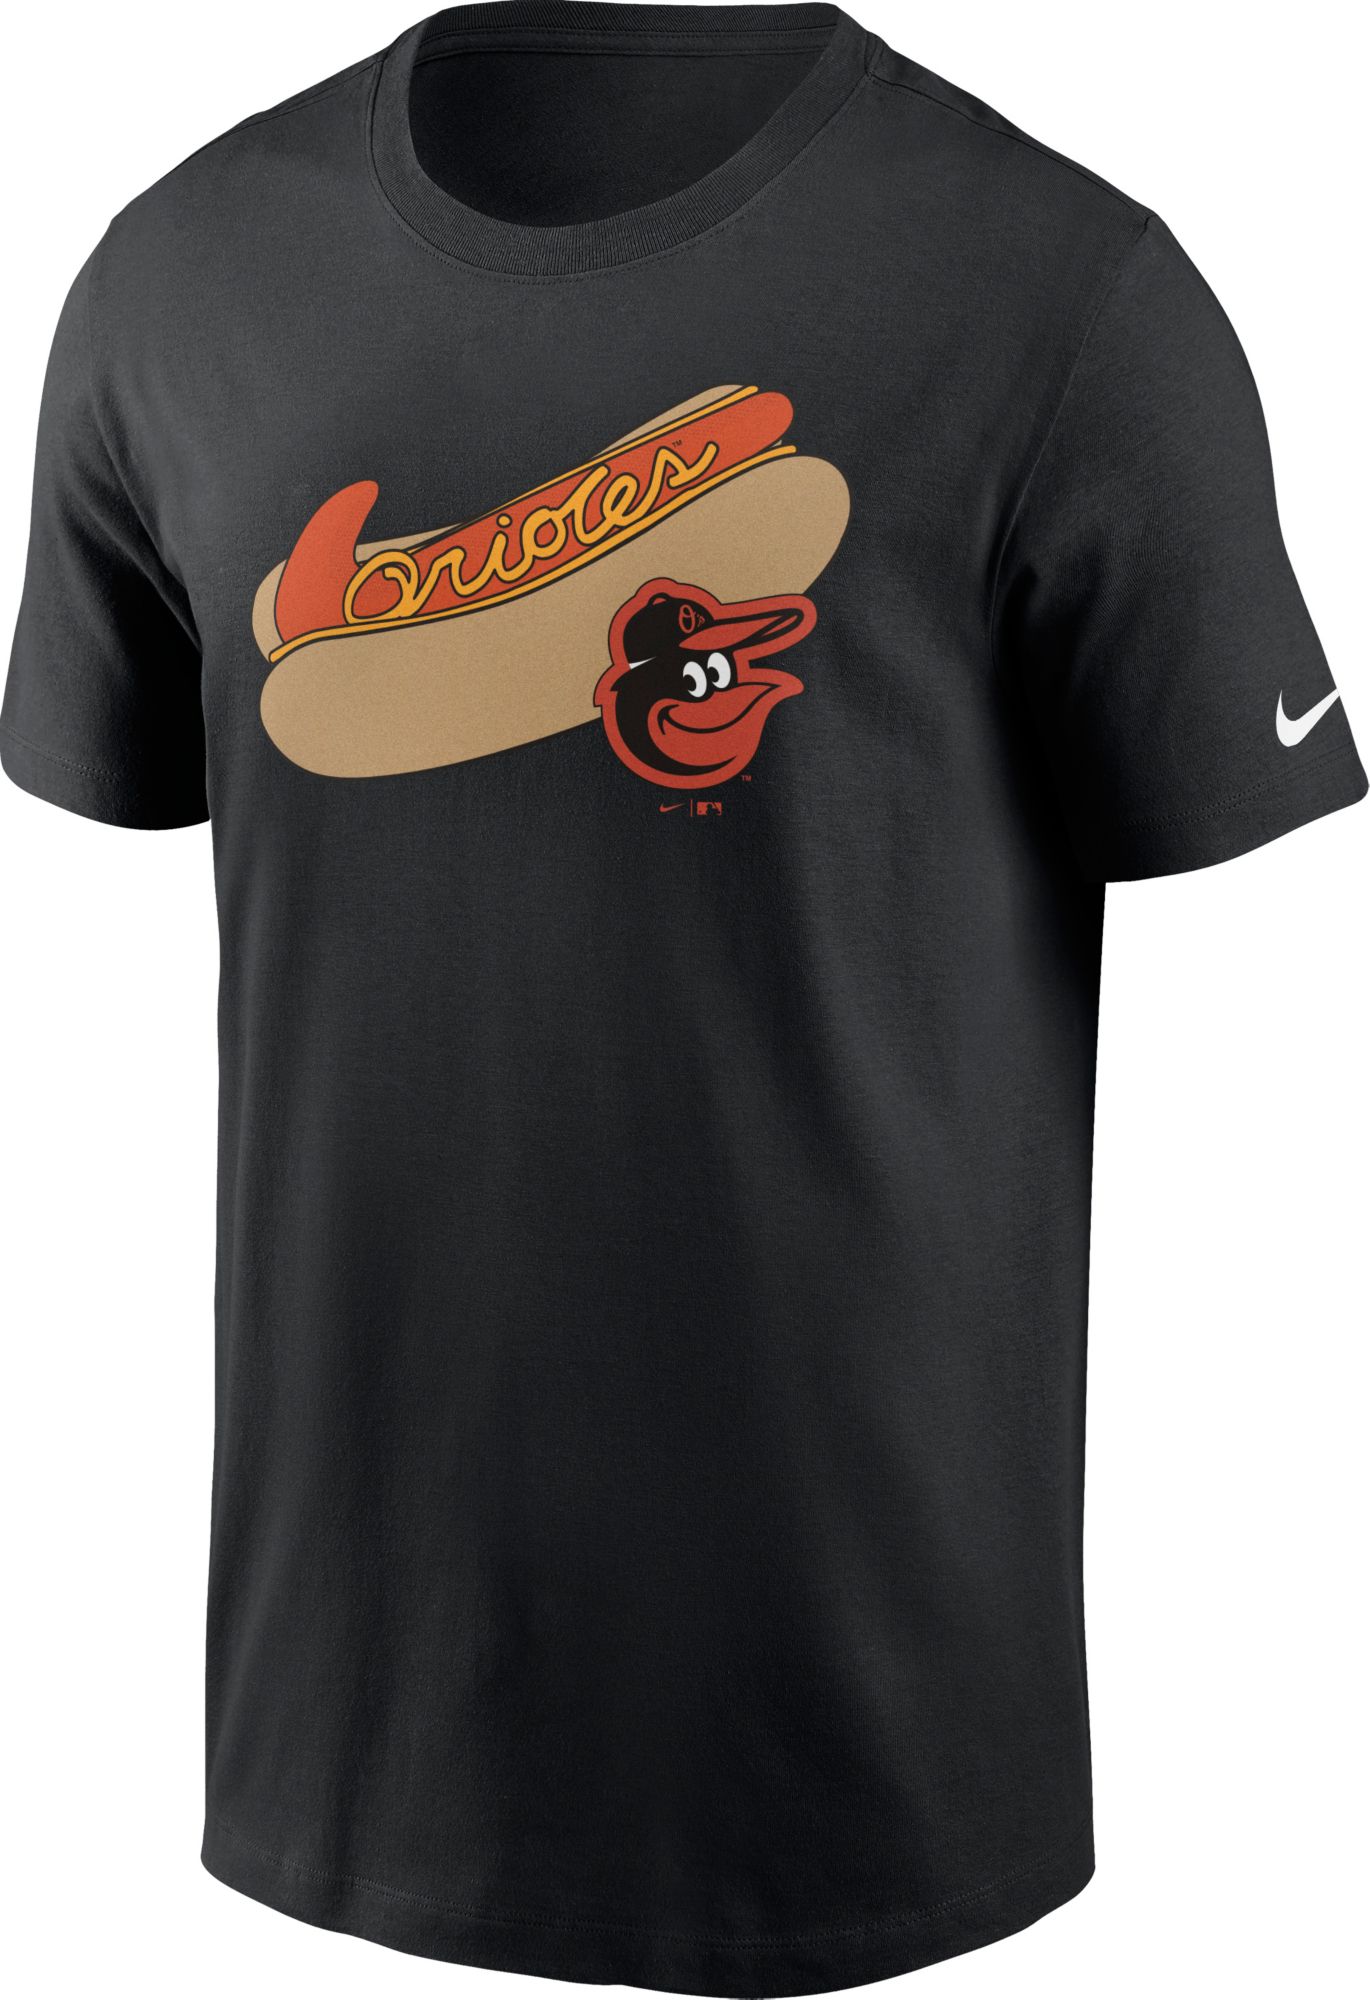 Orioles Hot Dog Race Shirt, Custom prints store